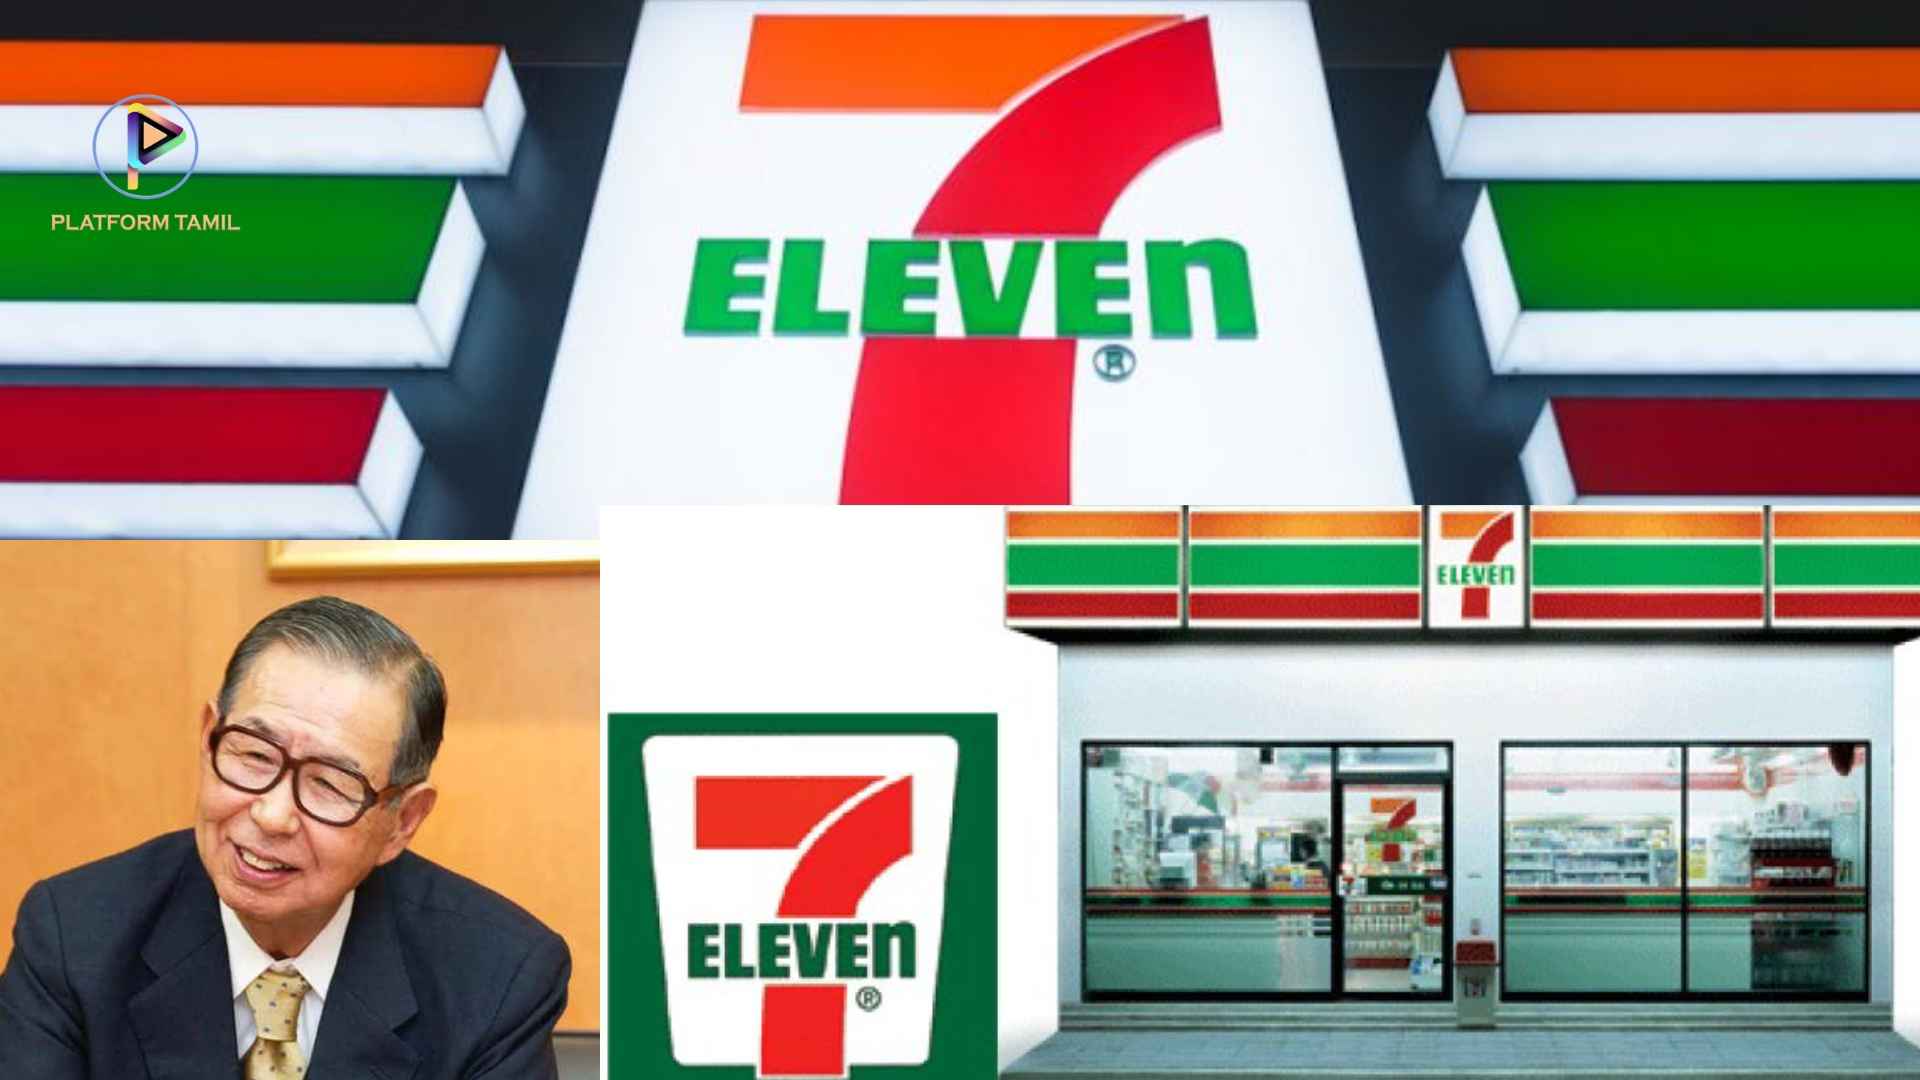 7 Eleven, Billionaire Masatoshi Ito - Platform Tamil